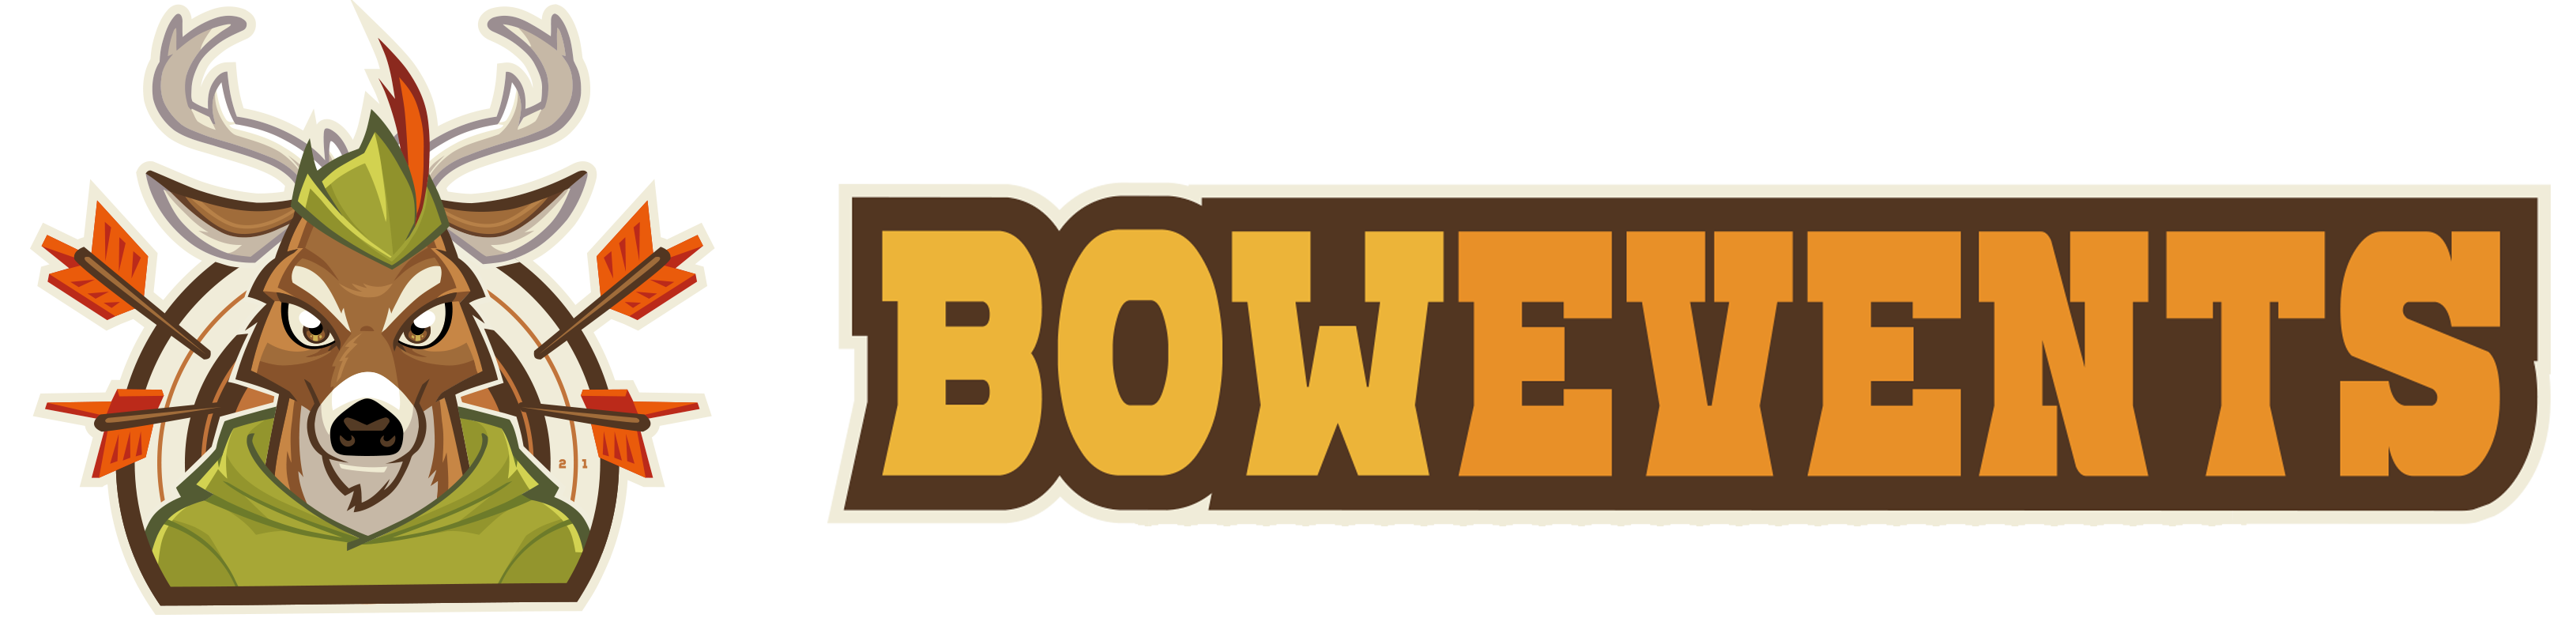 bowevents